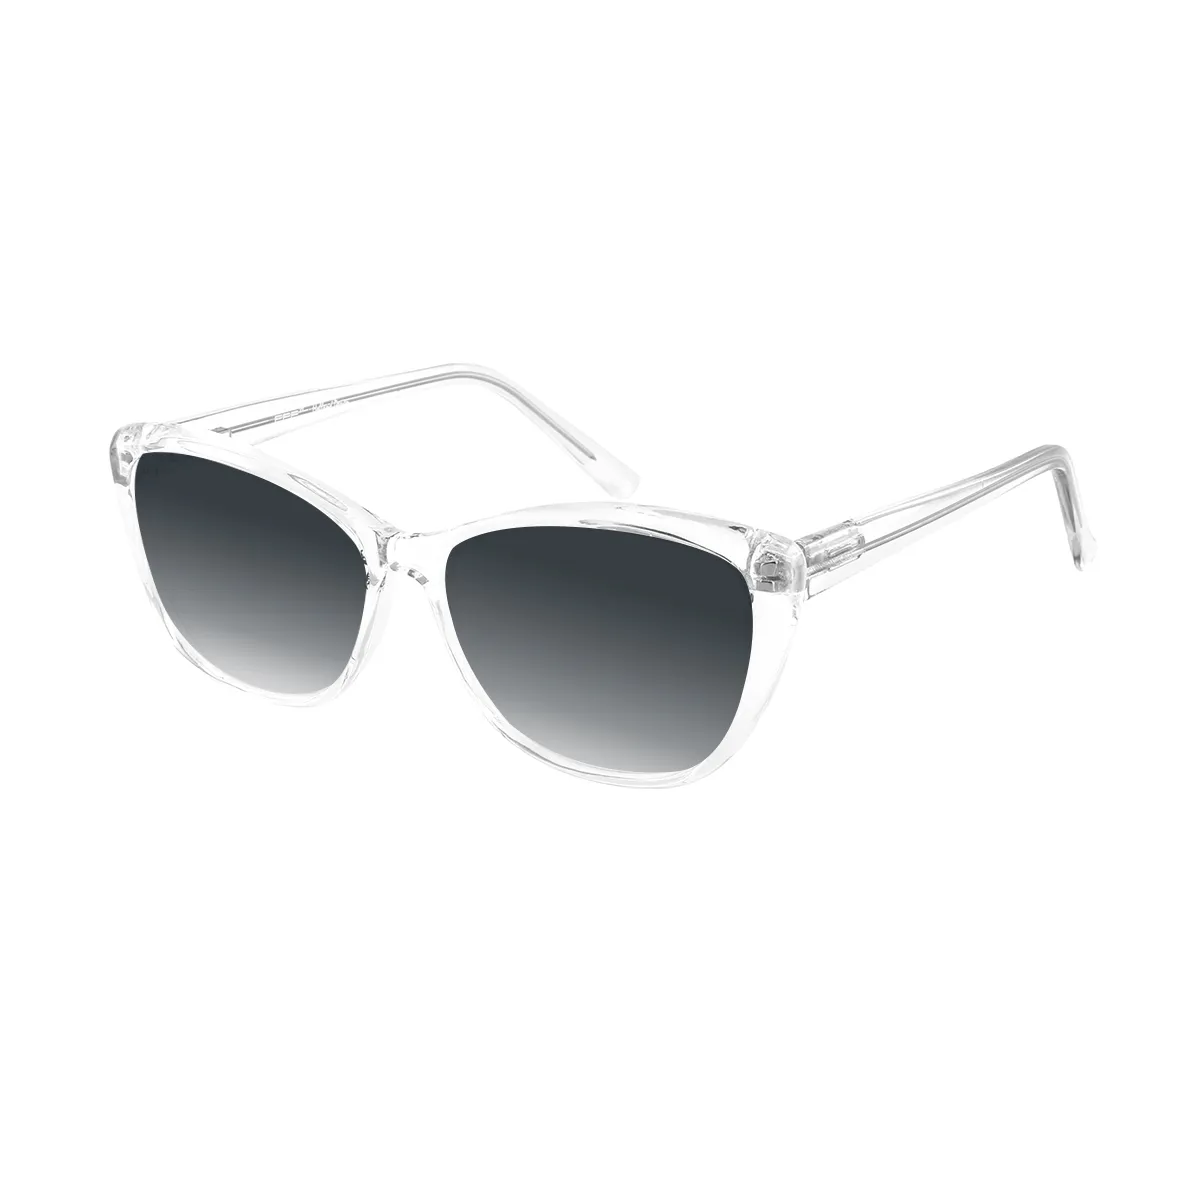 Abigail - Cat-eye Translucent Sunglasses for Women